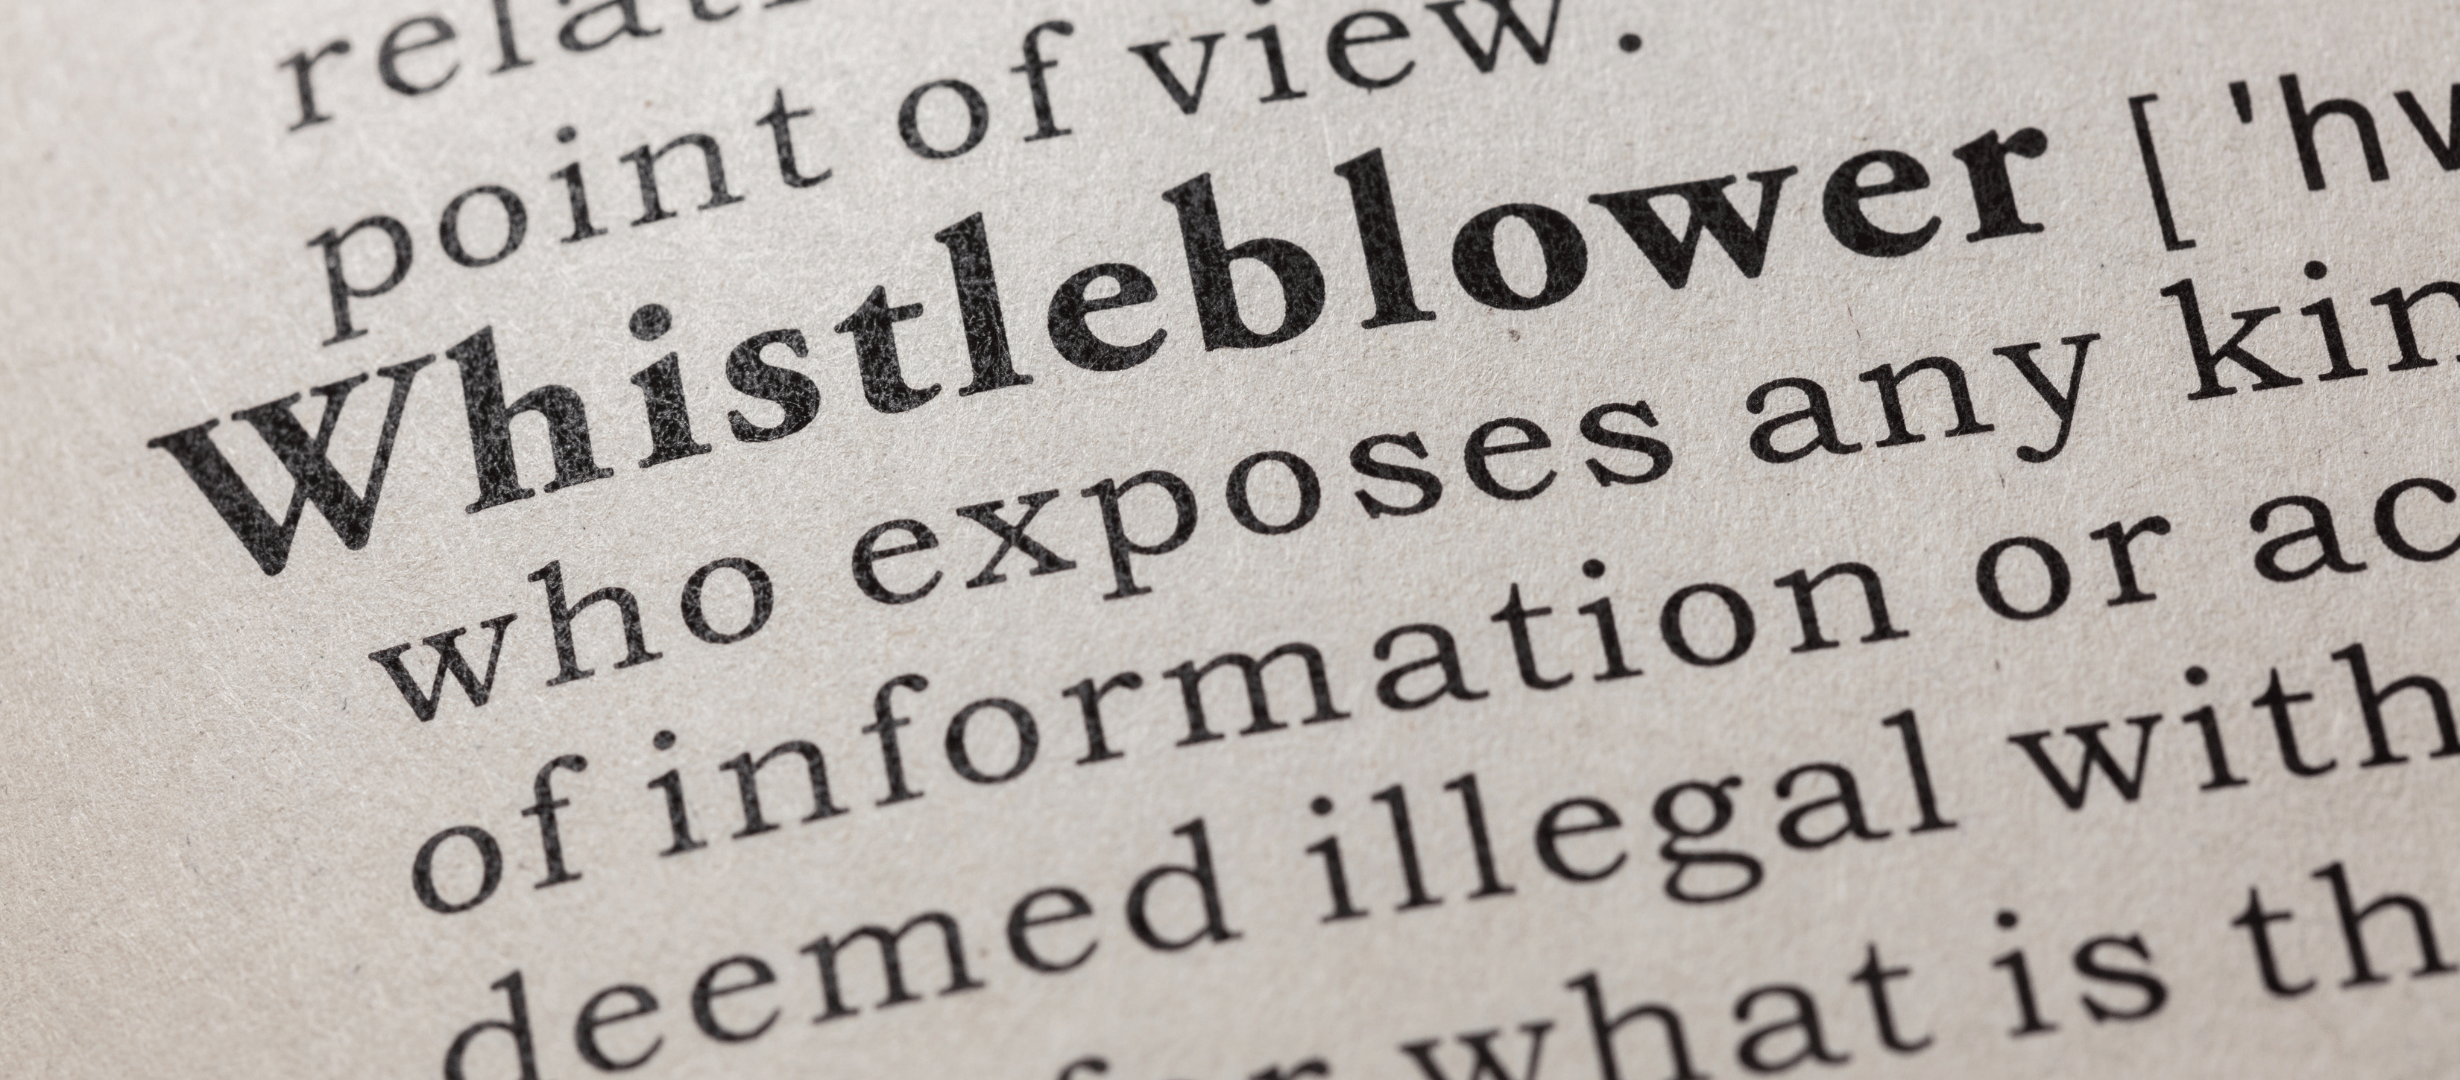 Cornwalls - Whistleblowing culture